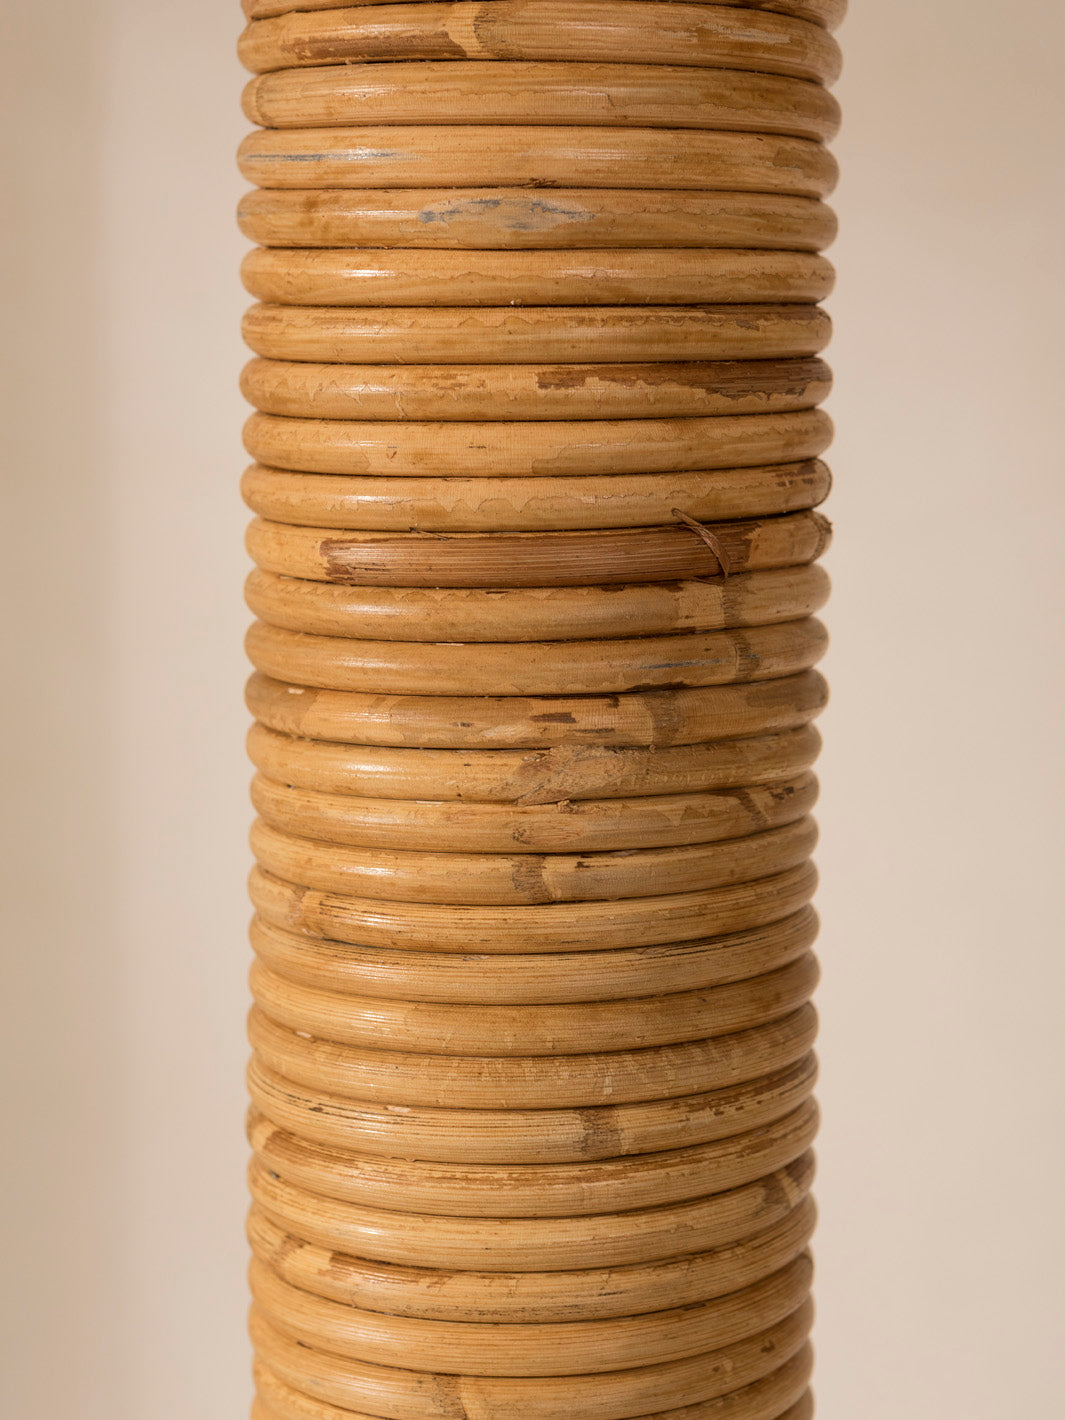 Lámpara artesanal italiana de bambú